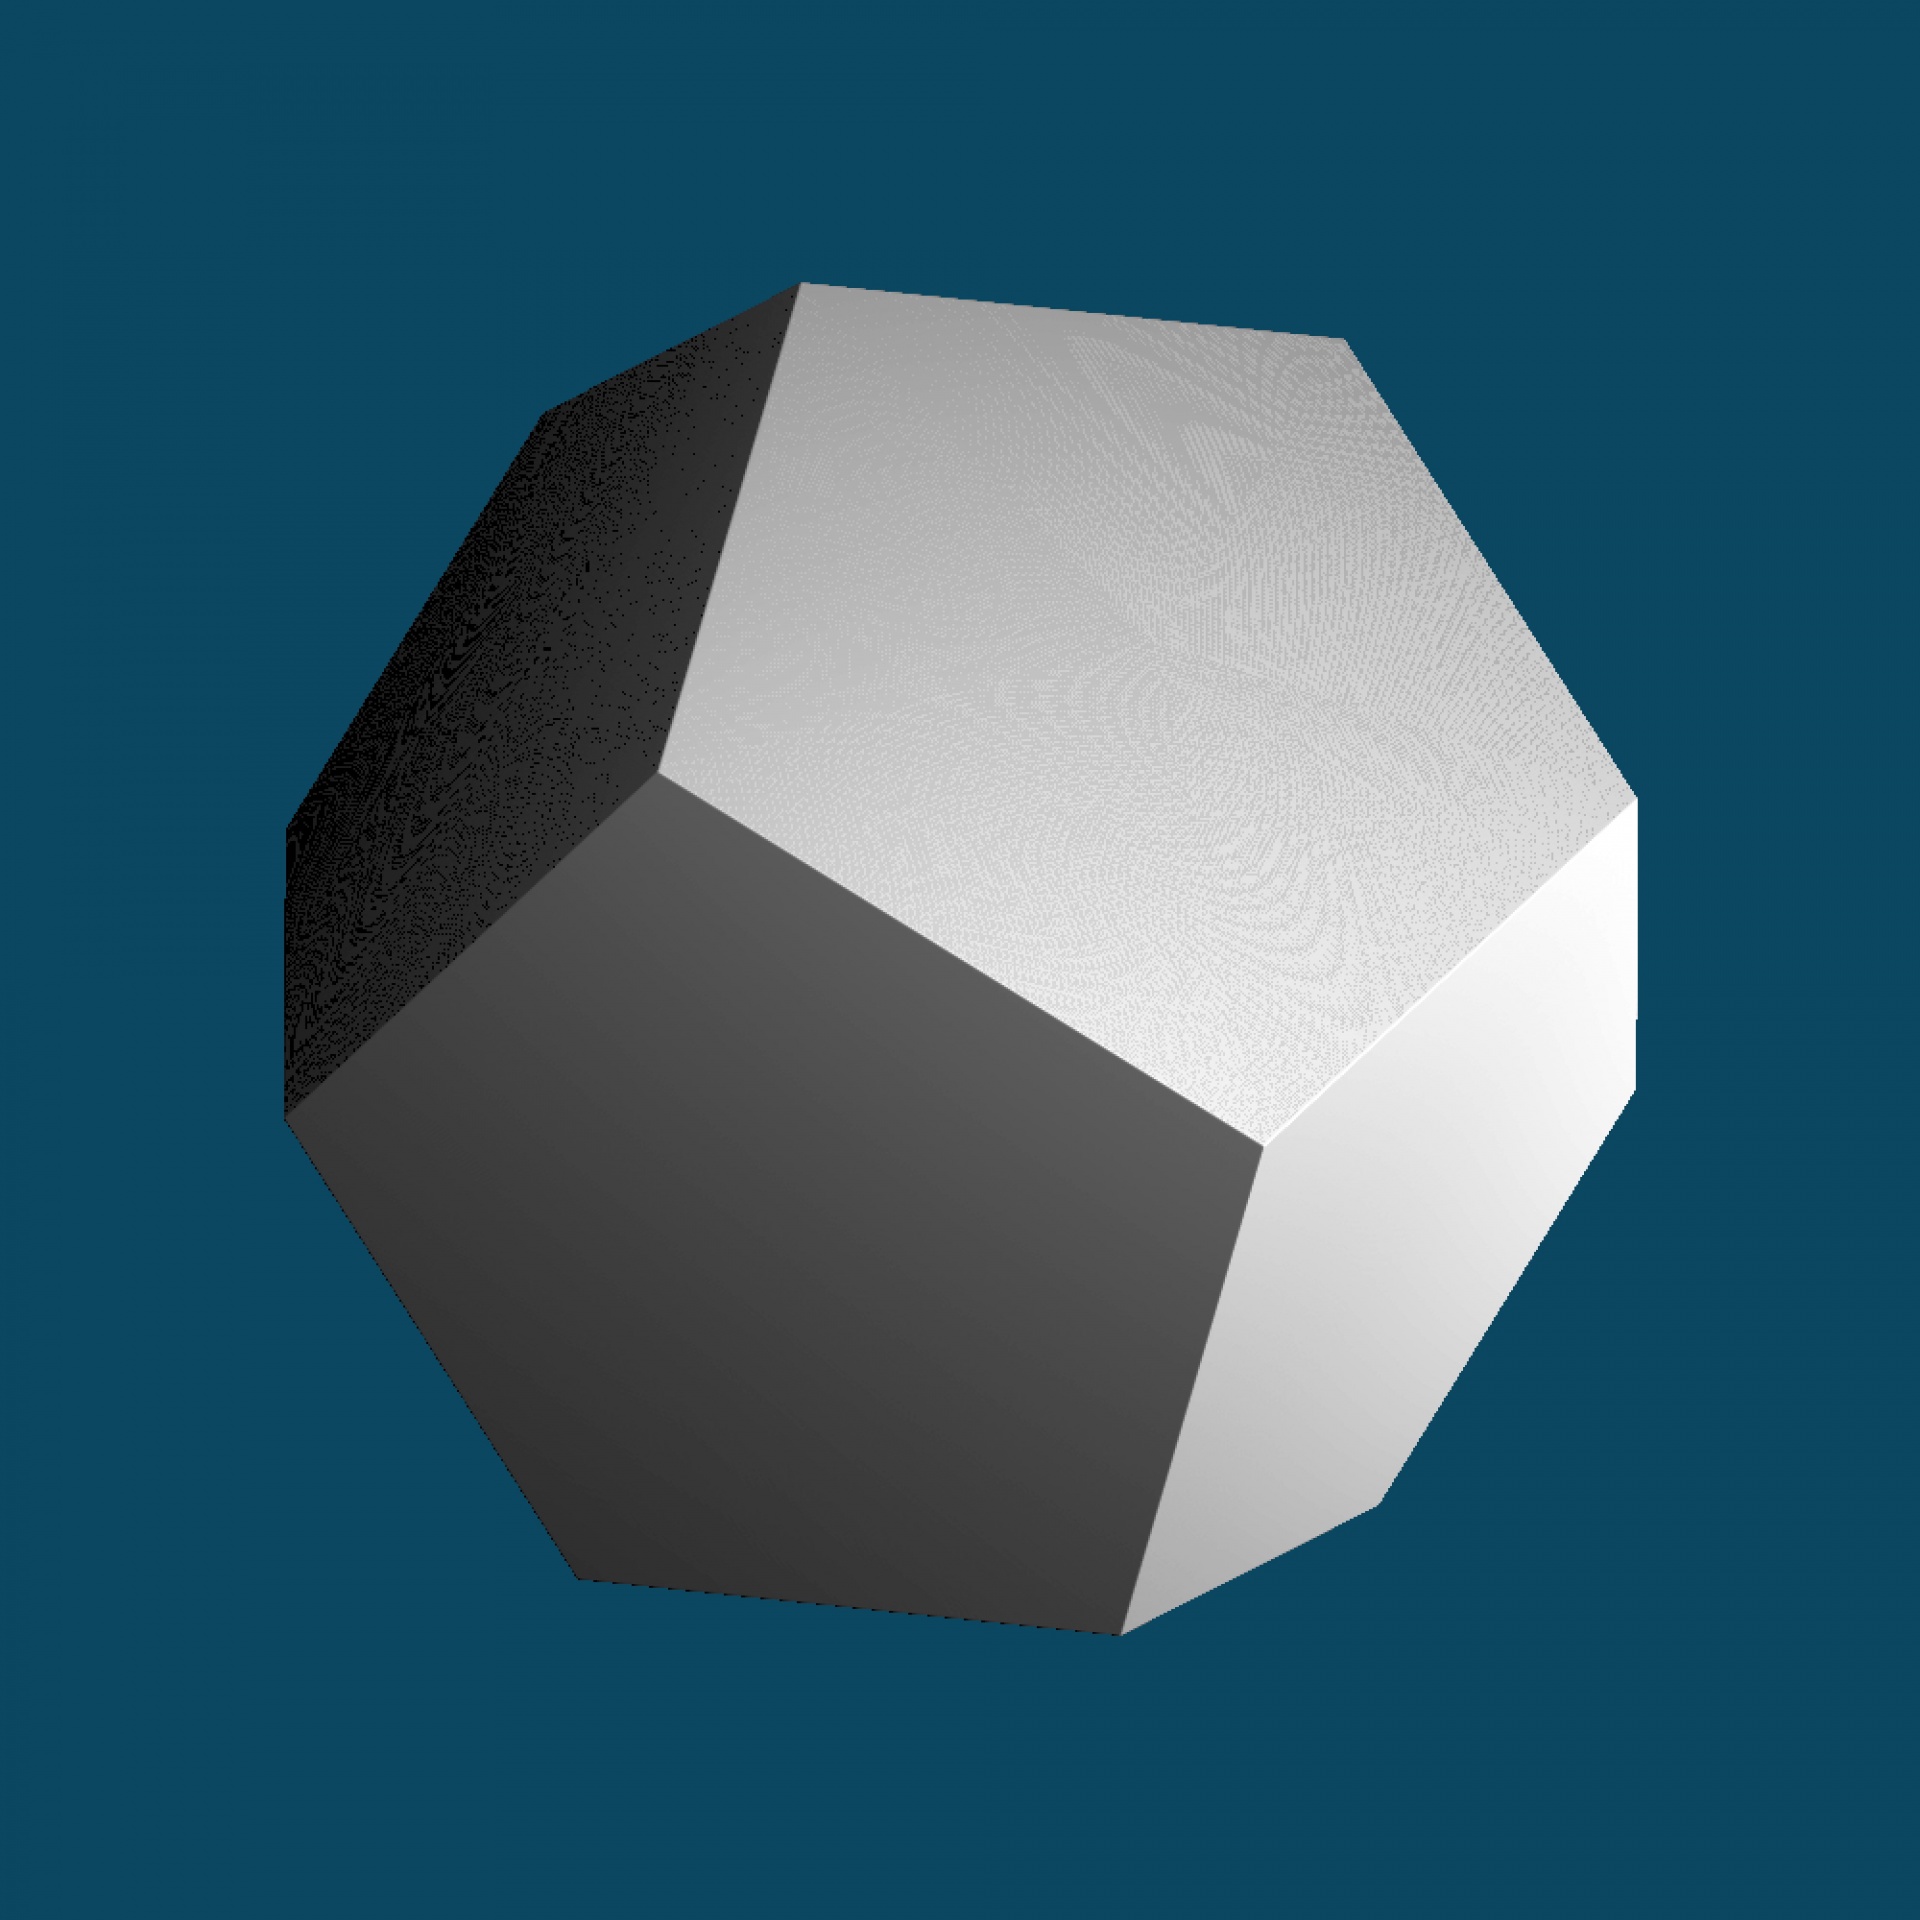 Fractal Dodecahedron